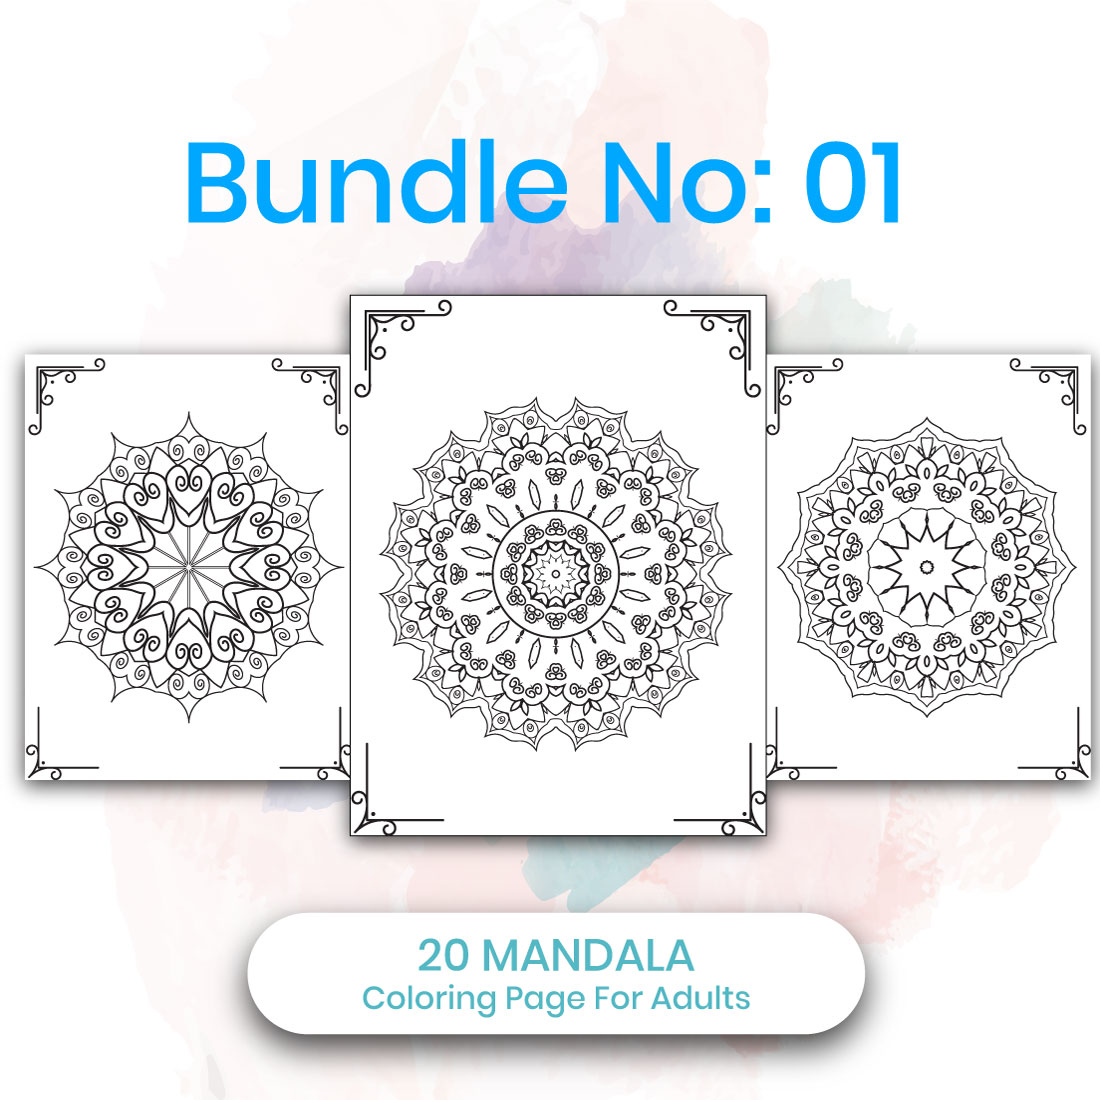 Bundle of 10 Relaxation Mandalas Coloring Book Pages - MasterBundles